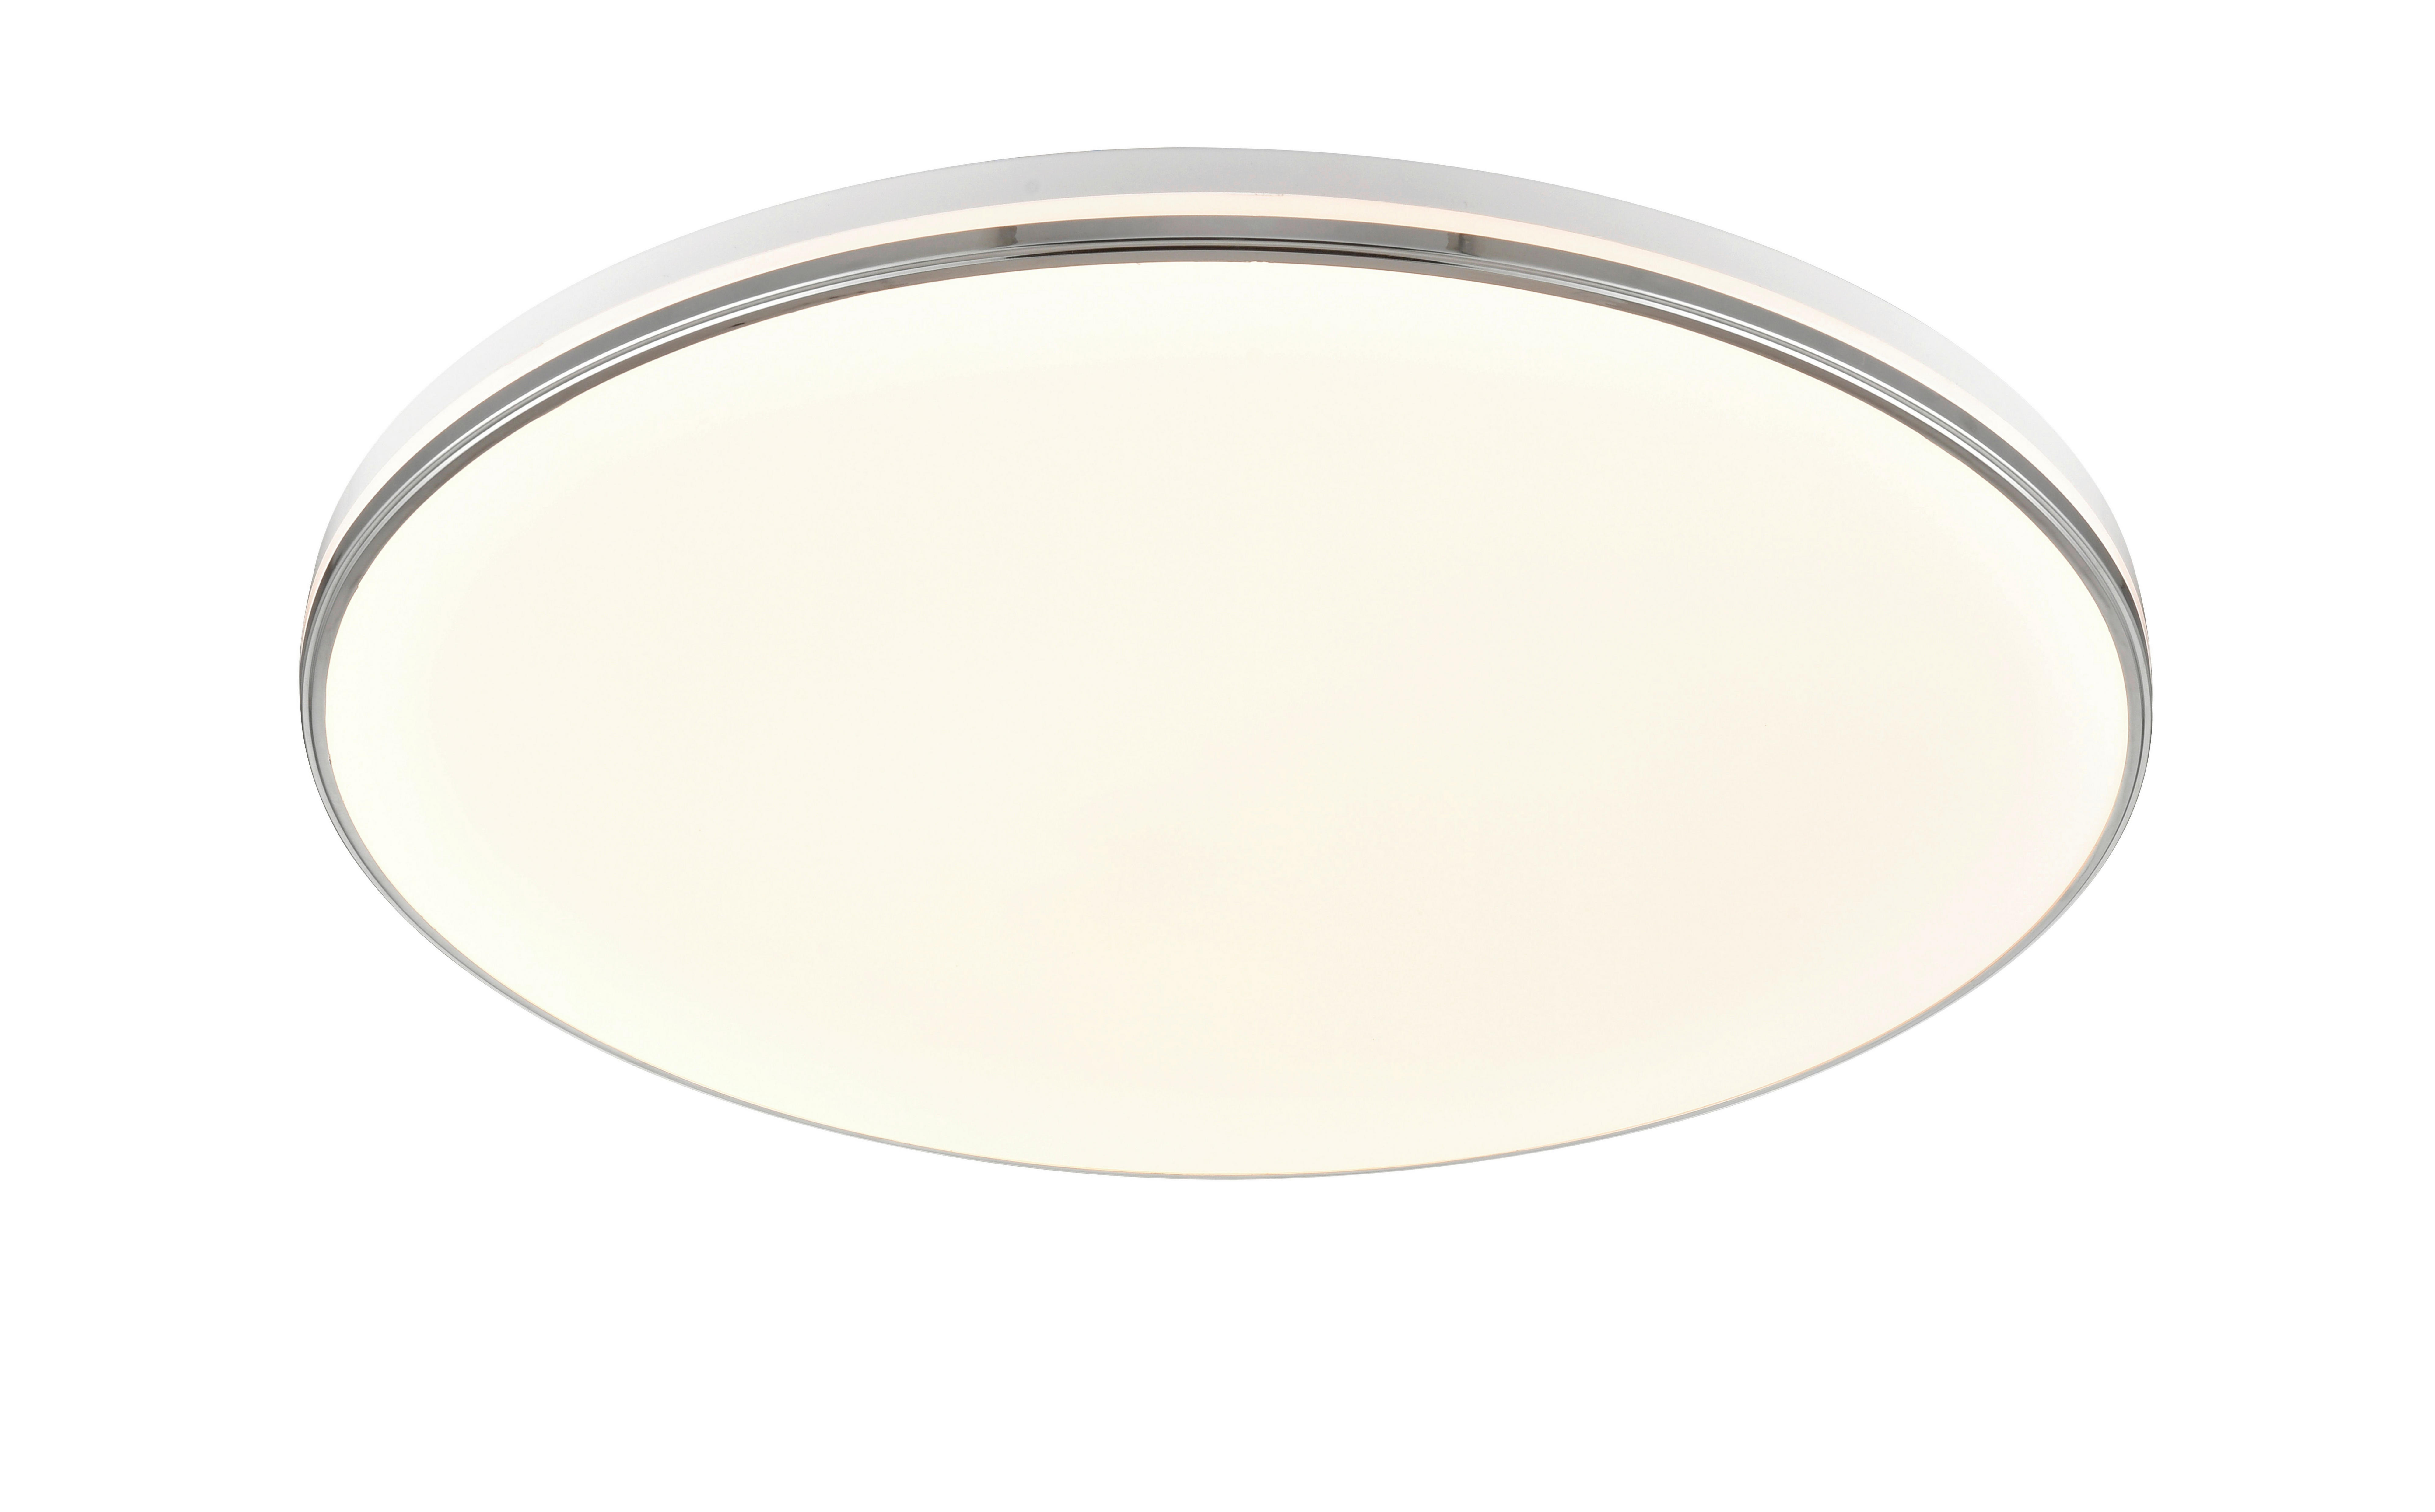 LED STROPNÁ LAMPA, 50 cm - biela, Basics, kov/plast (50cm) - Celina